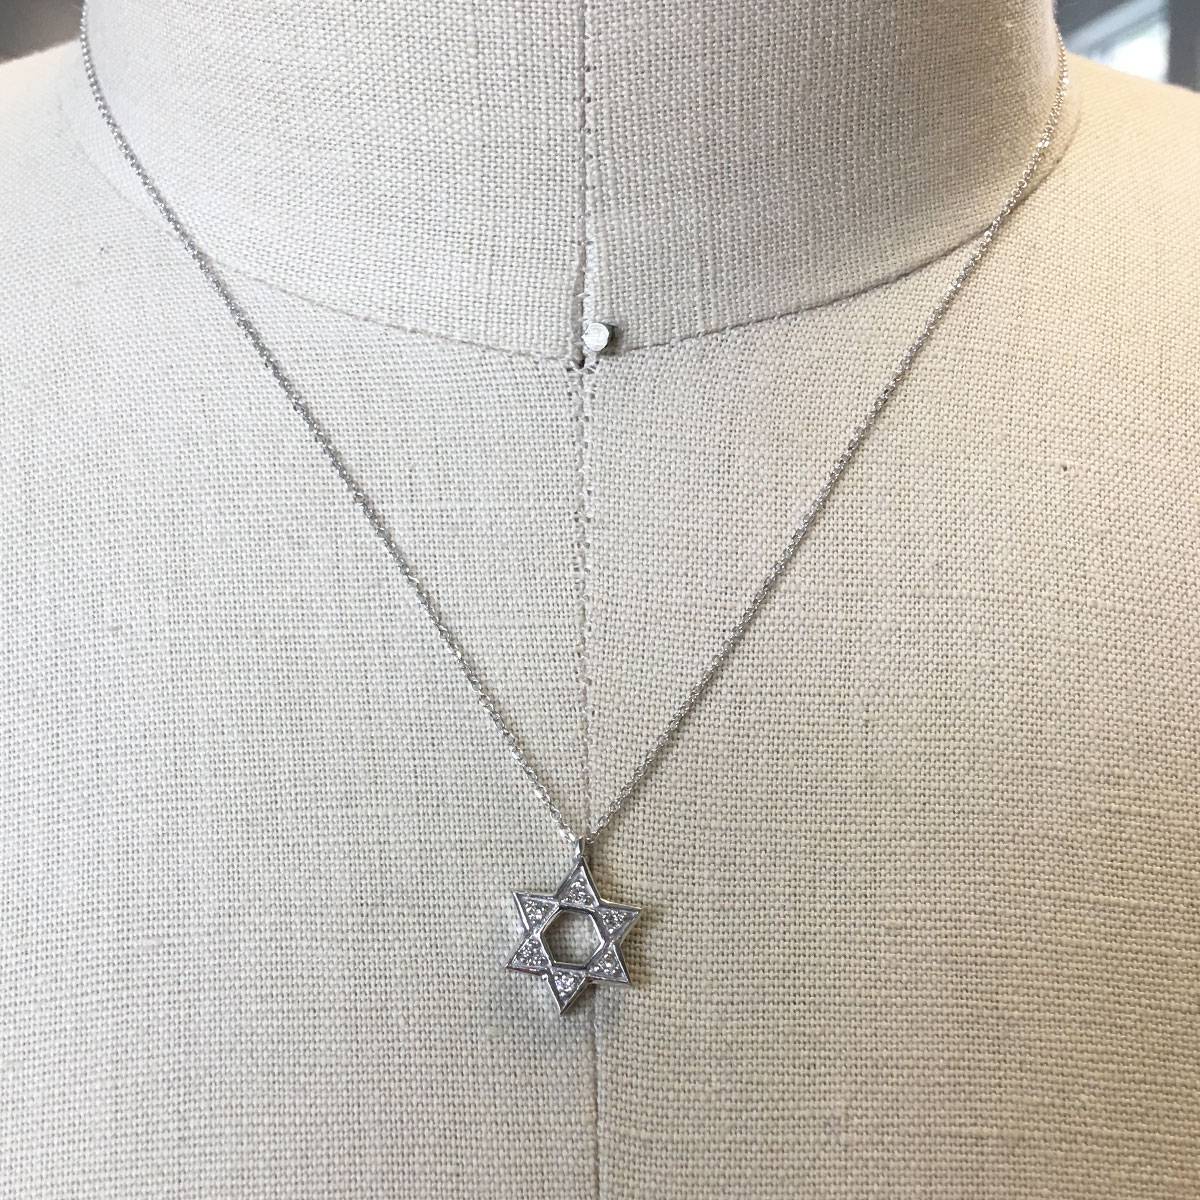 Tiffany & Co. Tiffany Star necklace 925 silver / 00096 | eBay